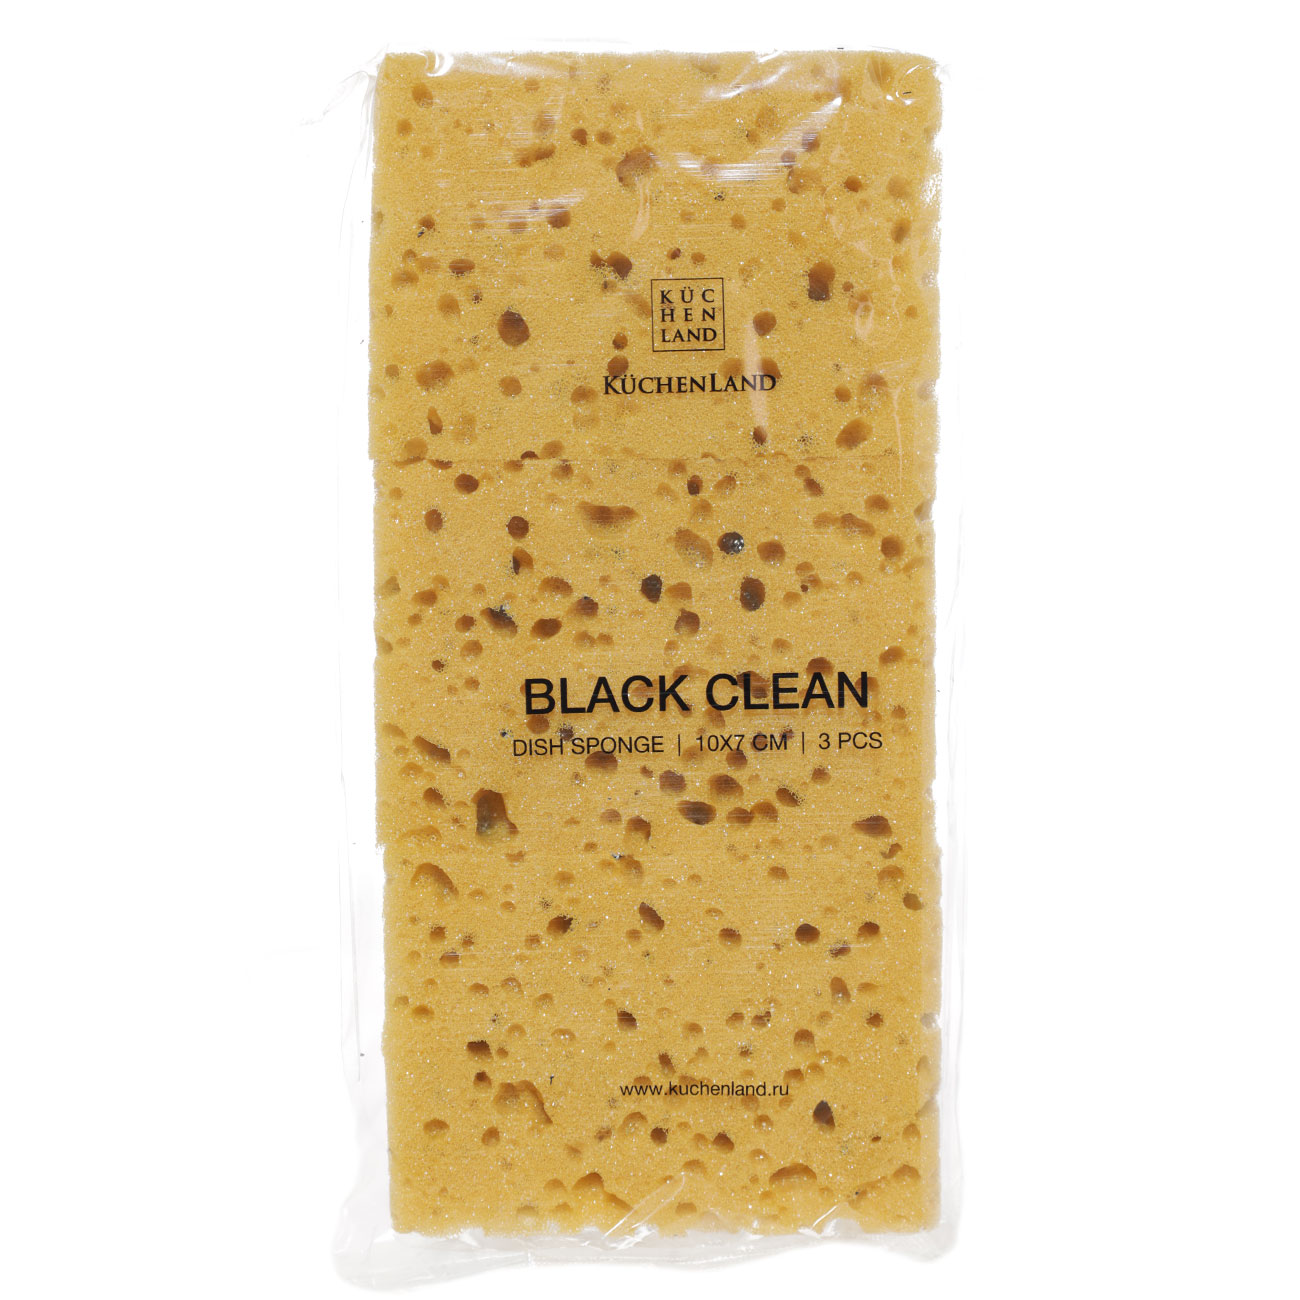 Dish washing sponge, 10x7 cm, 3 pcs, foam rubber / abrasive, black and yellow, Black clean изображение № 3